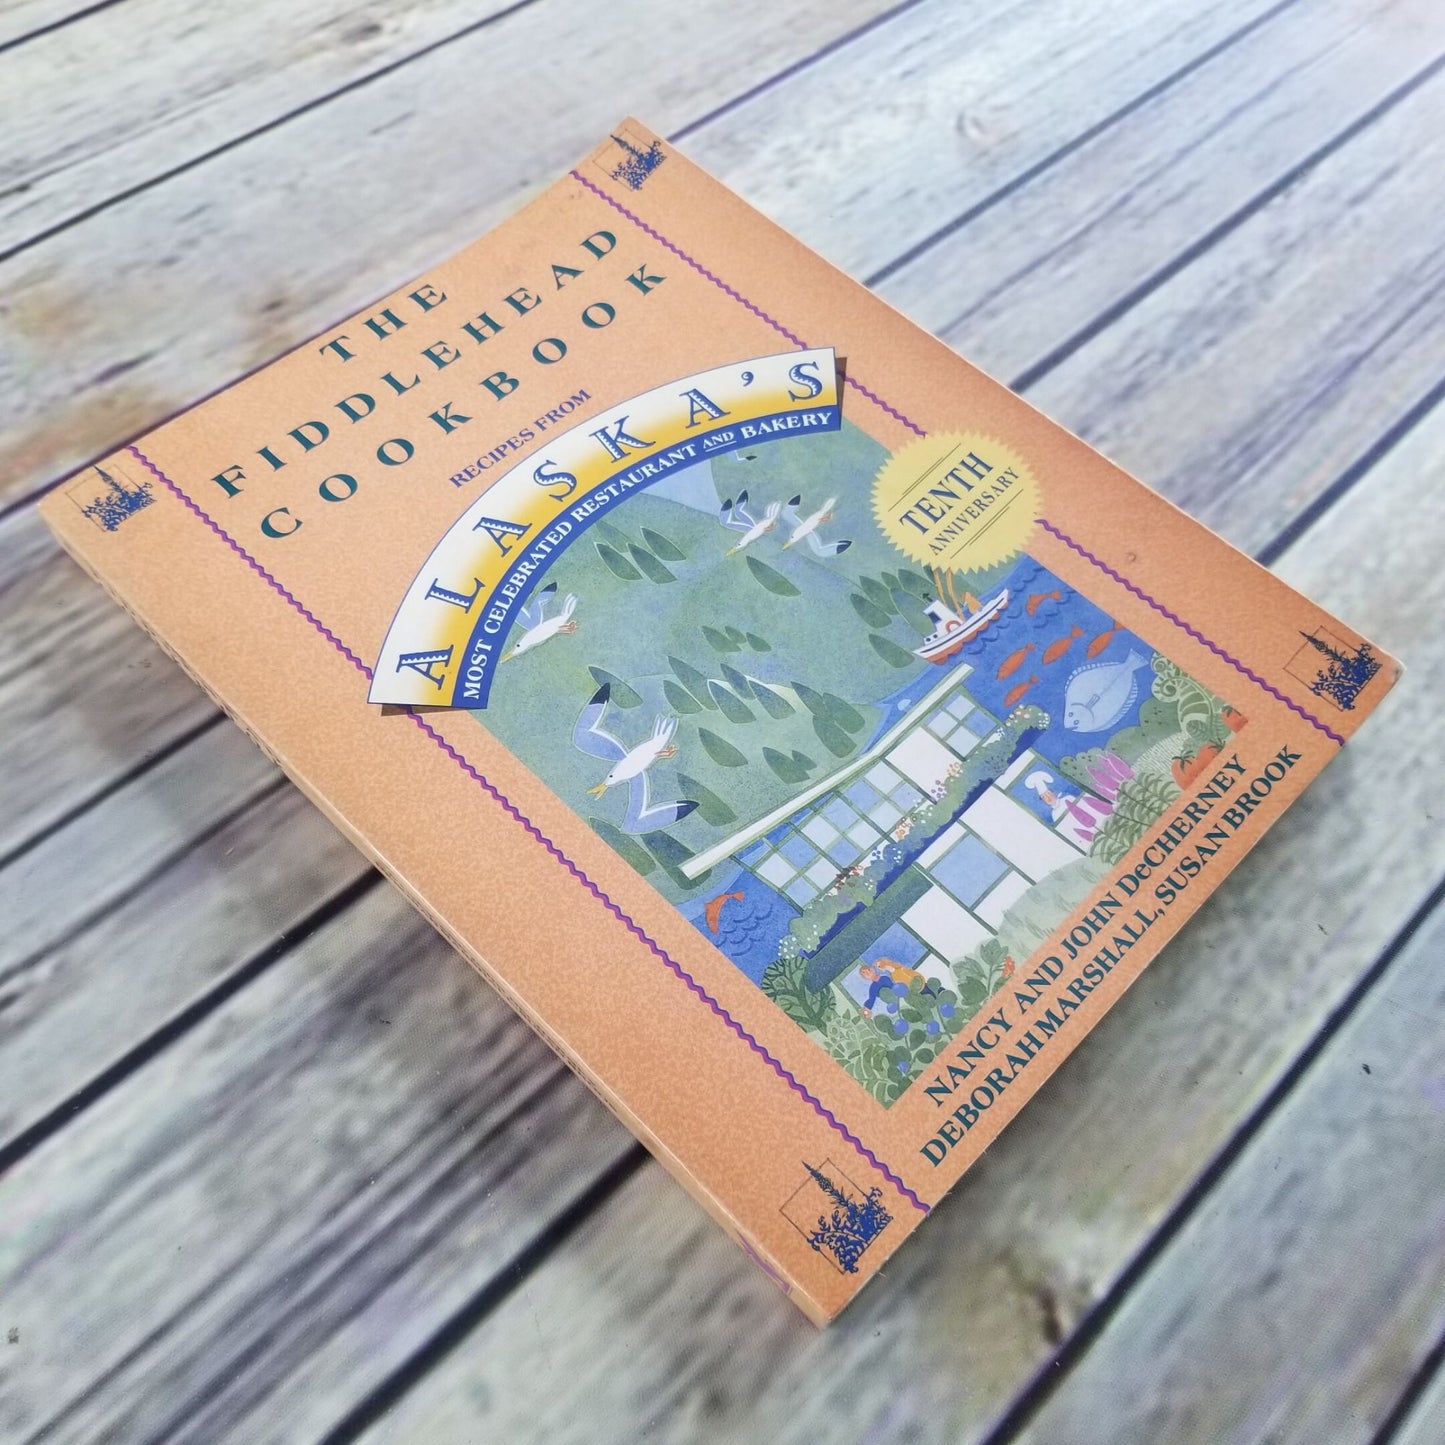 Vintage Alaska Cookbook The Fiddlehead Cookbook Recipes from Alaska Restaurant and Bakery 1991 DeCherney Marshall Brook Paperback